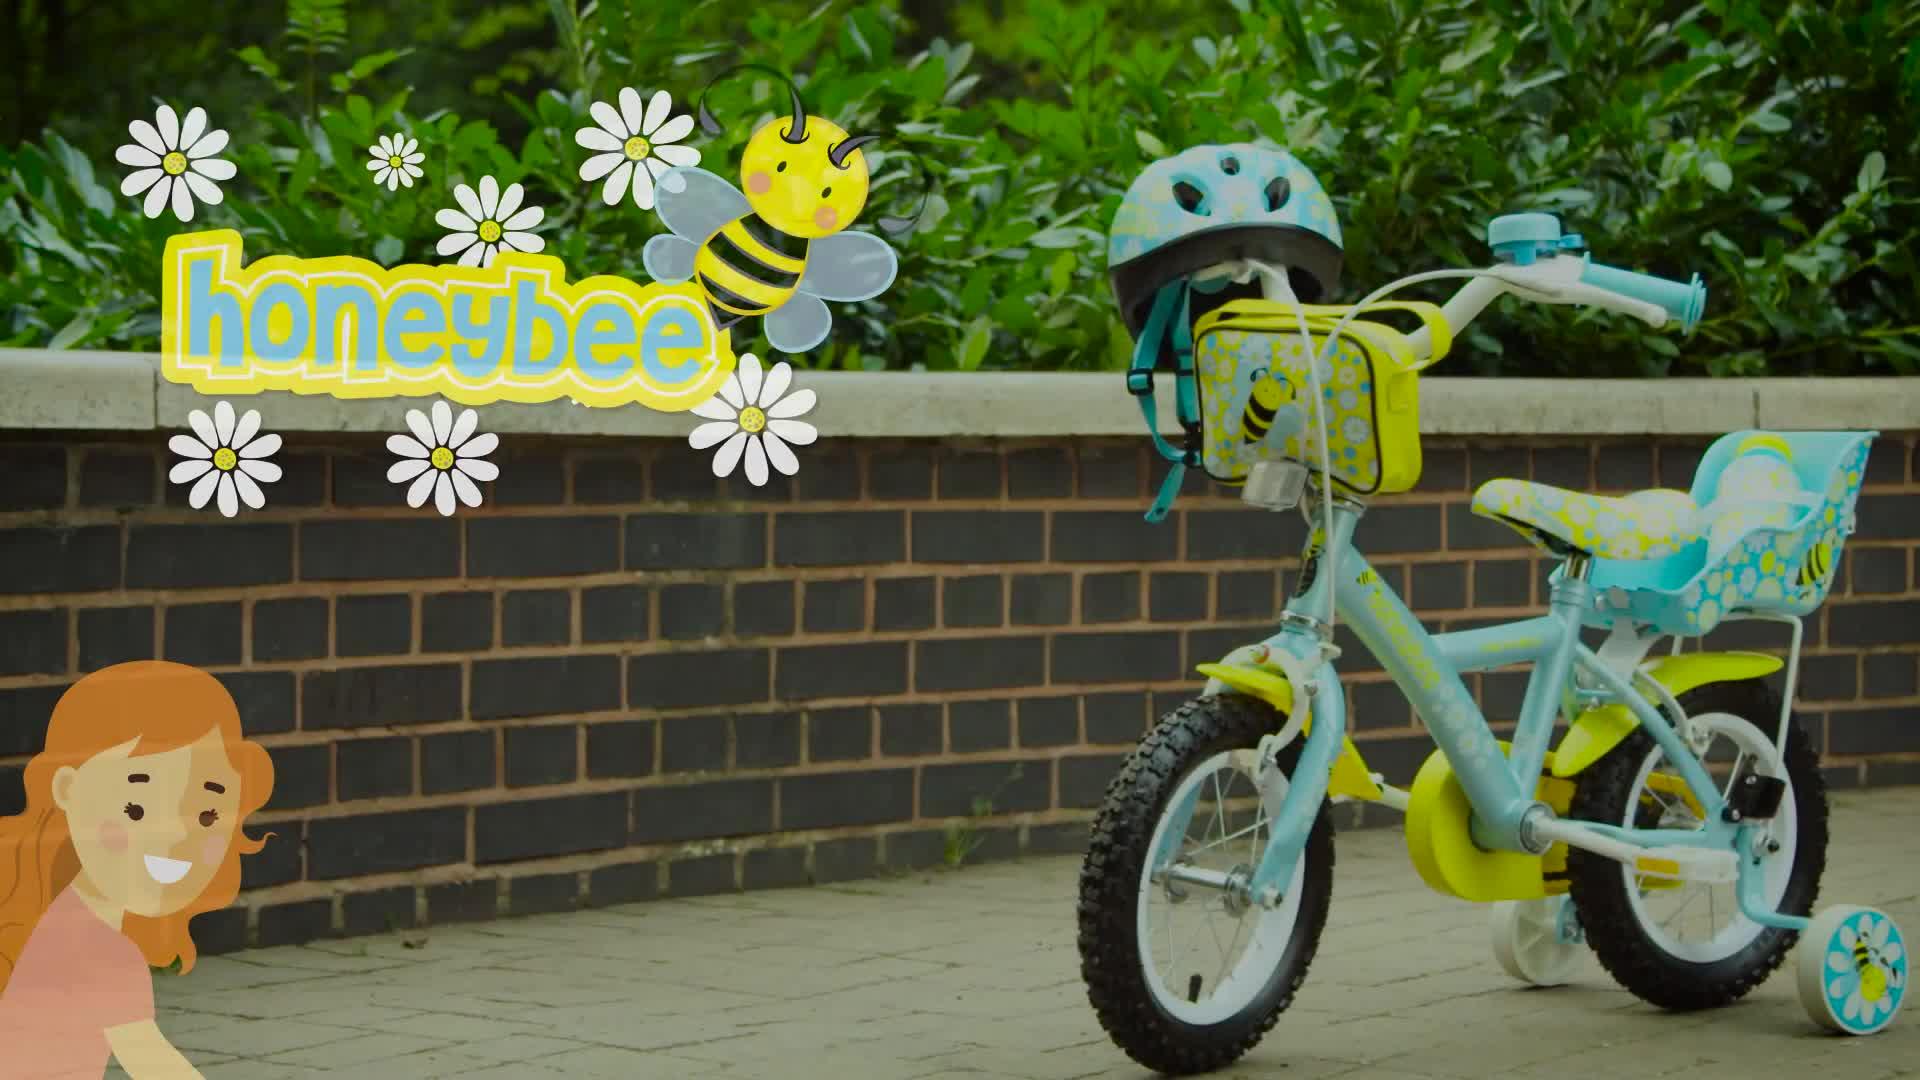 halfords bumblebee bike